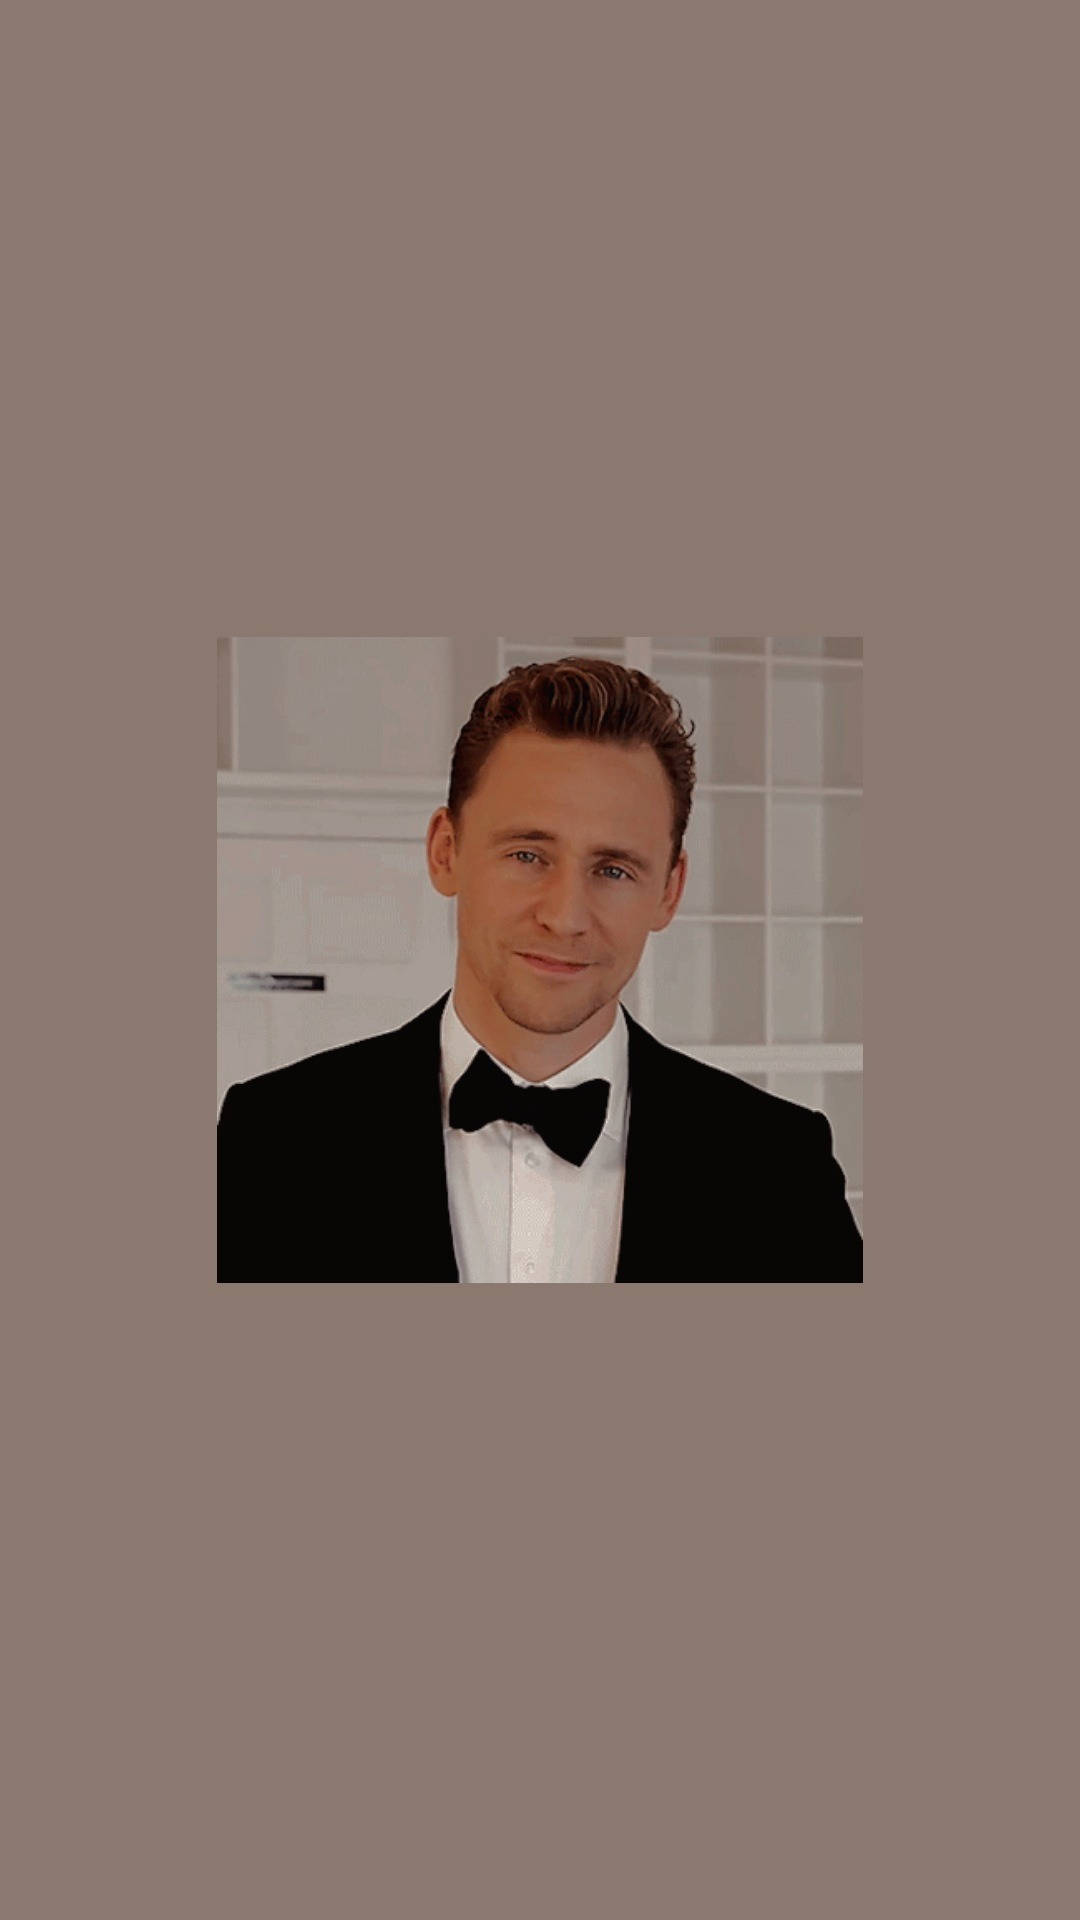 Tom Hiddleston In A Bow Tie